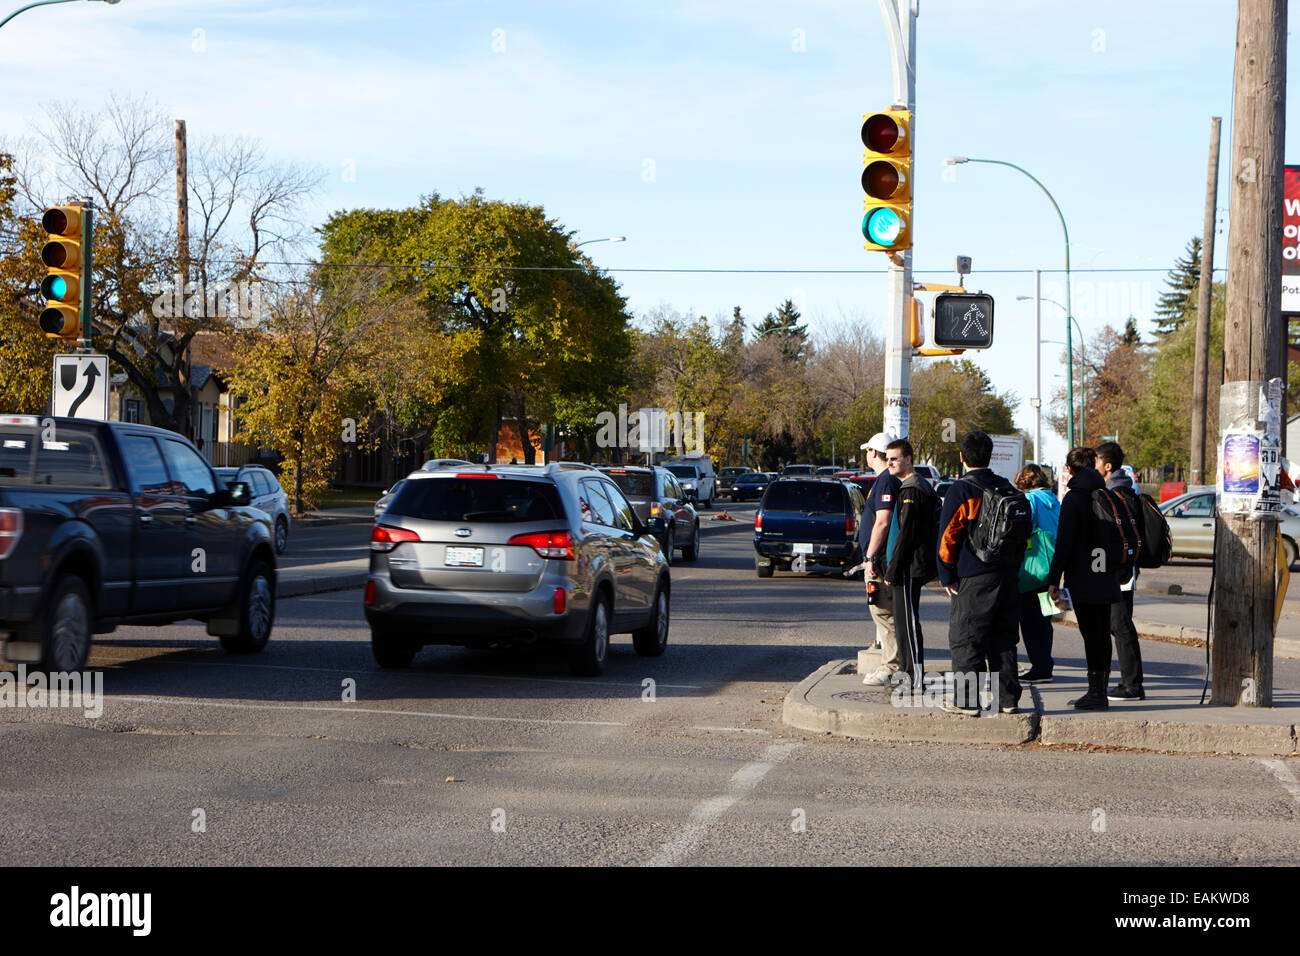 La gente esperando para cruzar la calle rush hour en Saskatoon, Saskatchewan Canadá Foto de stock